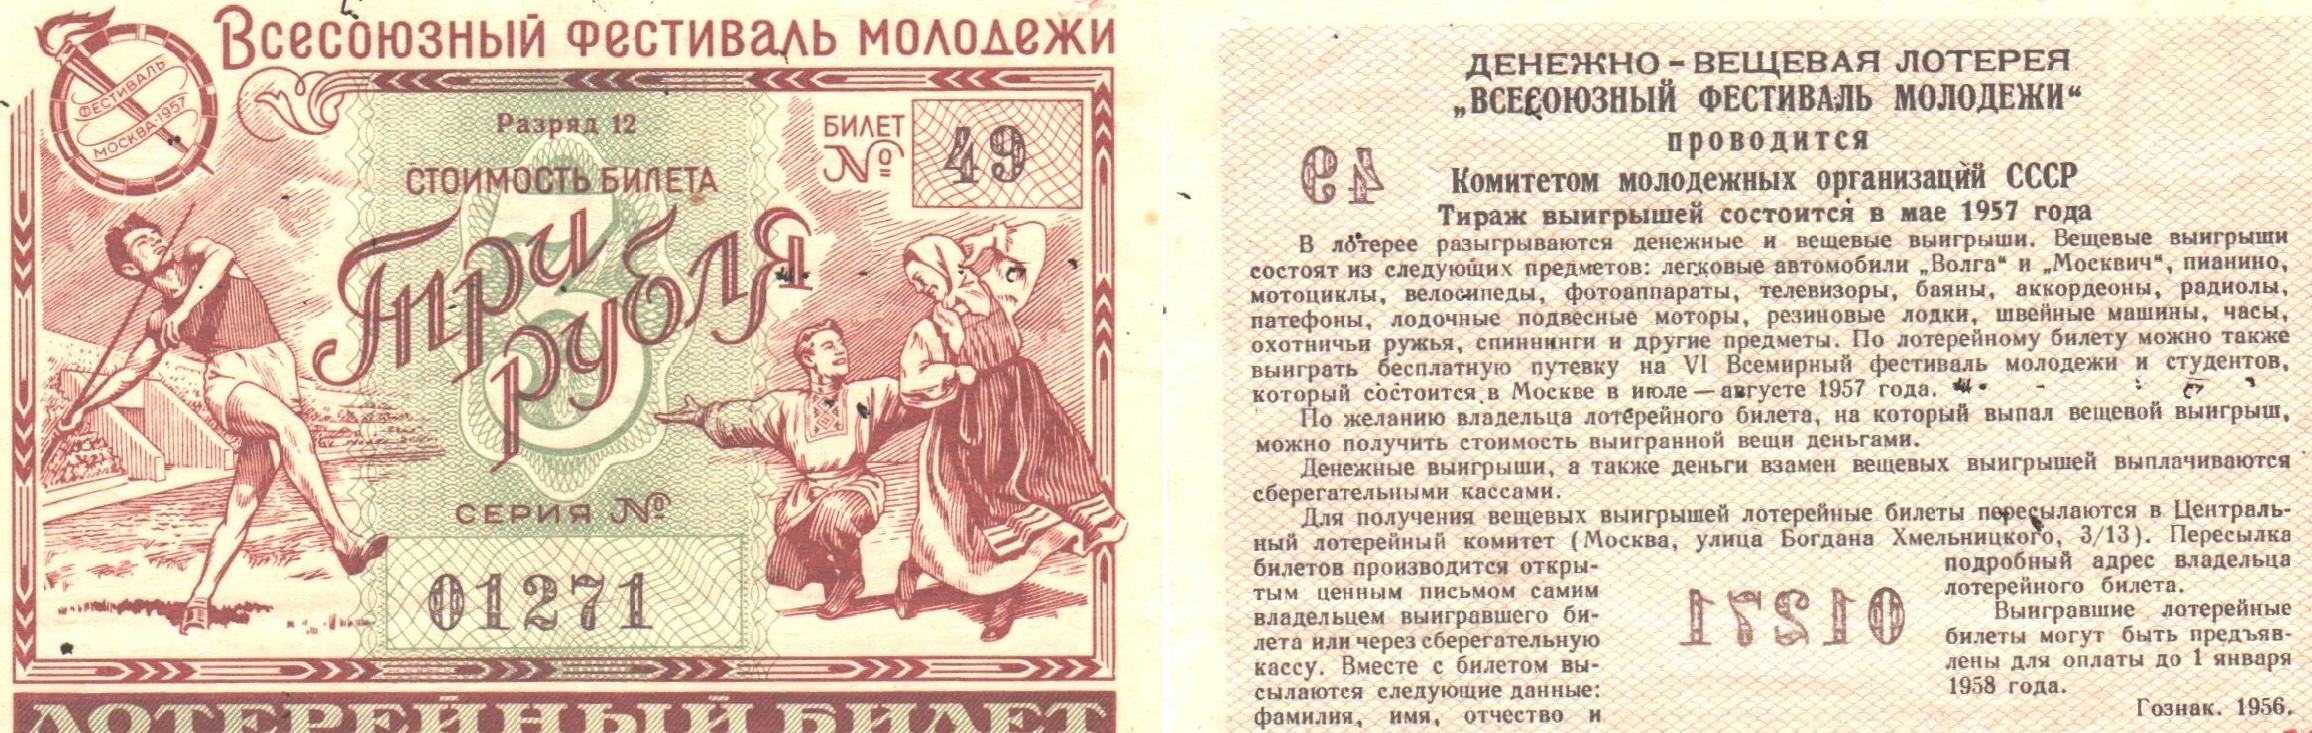 Лотерейный билет. Денежно-вещевая лотерея. Лотерейный билет 1956 года. Денежно-вещевая лотерея СССР. Лотерейные билеты закон